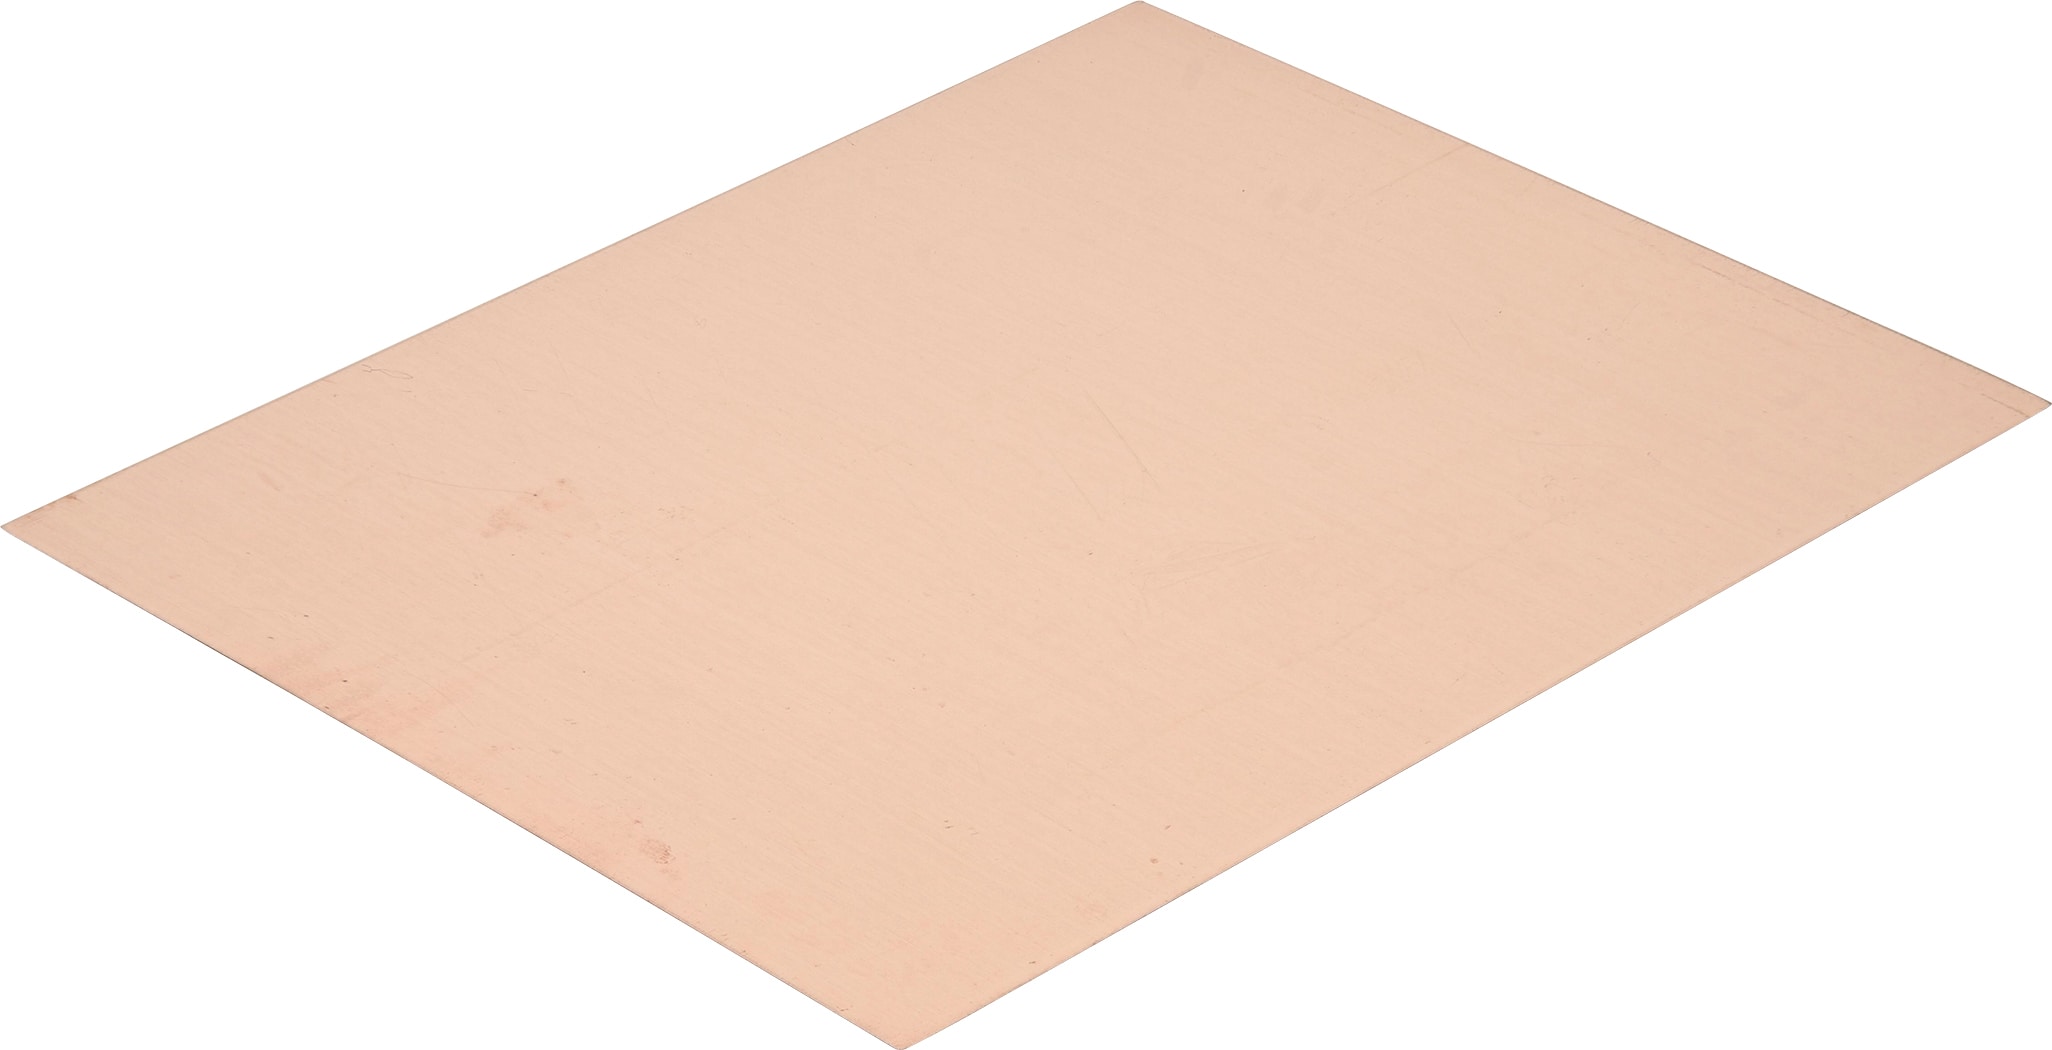 1/16" Flat Copper Sheet Plate 11" x 11" 48 oz 